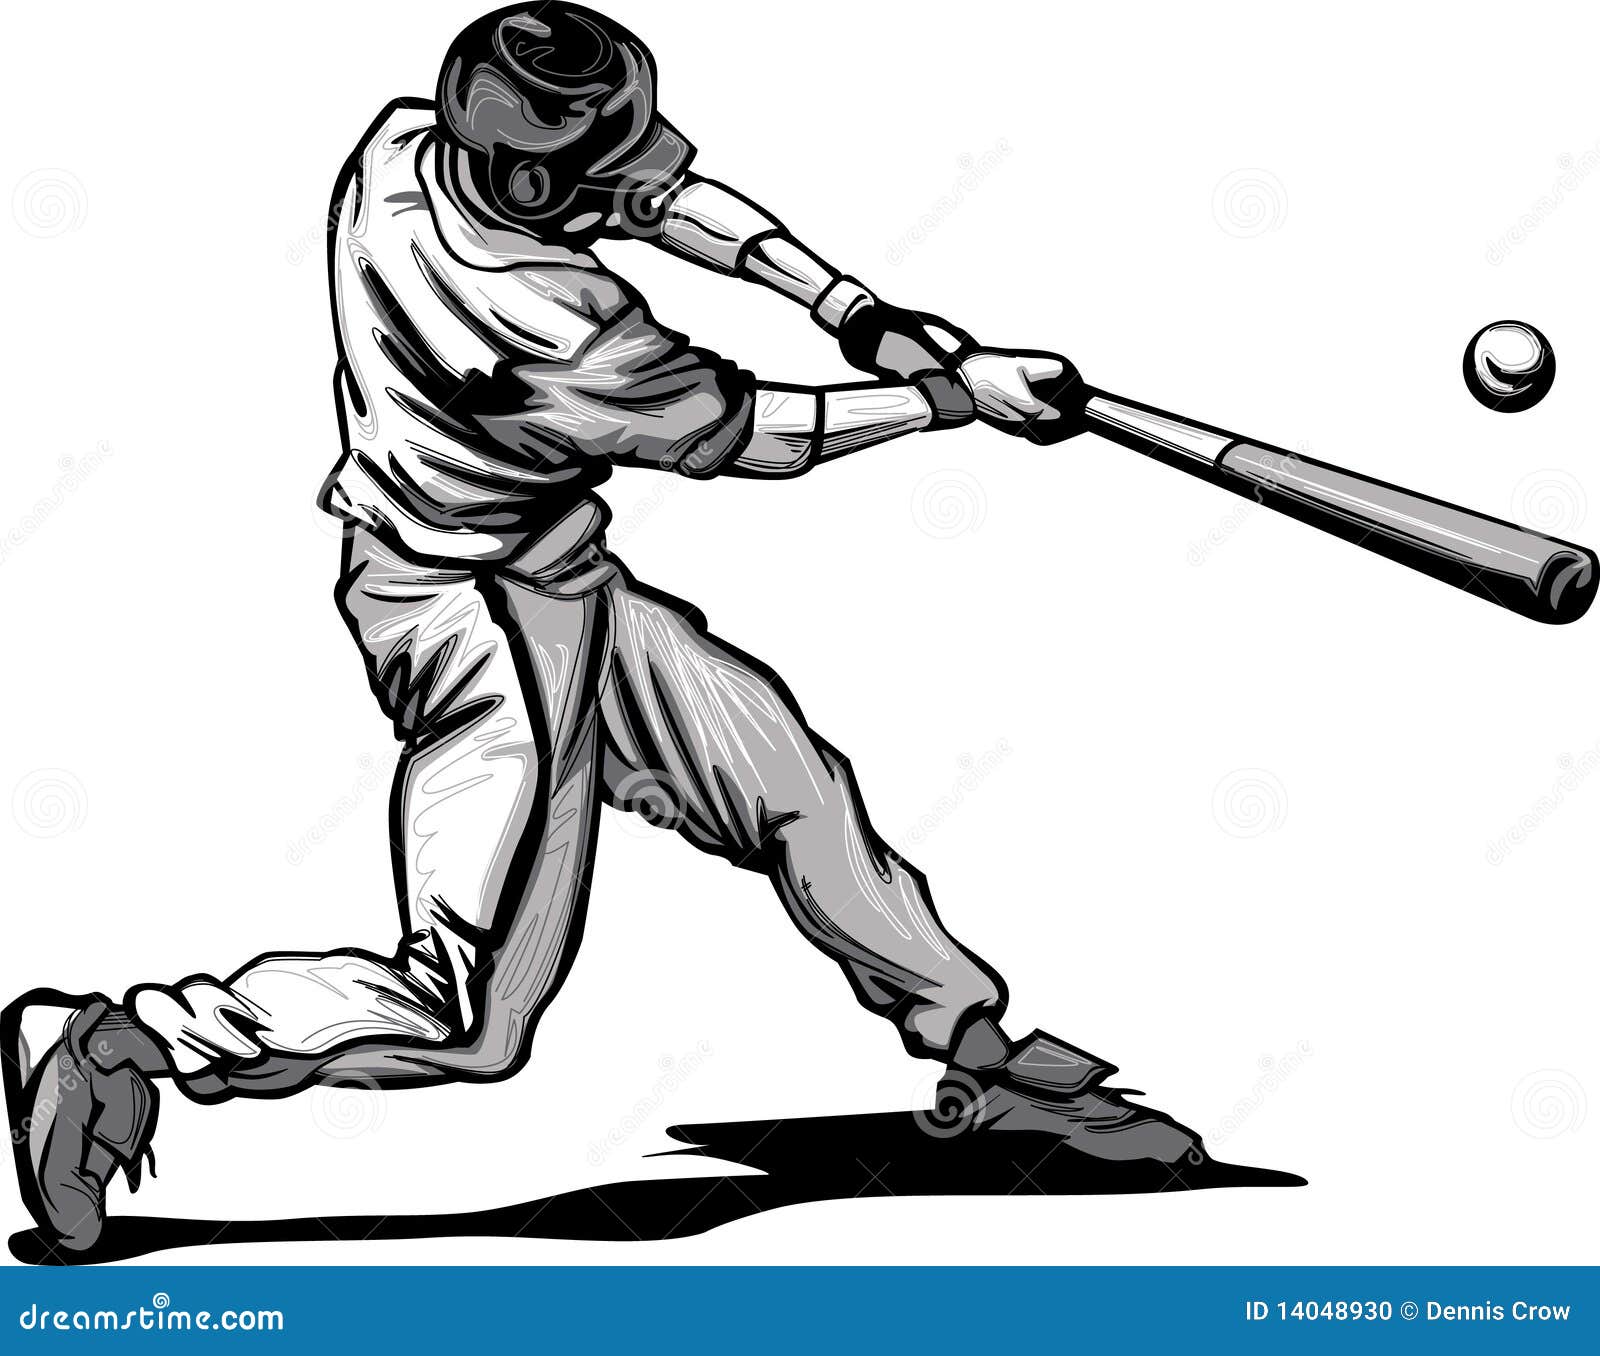 Baseball Batter Hitting Pitch Vector Image Stock Vector - Image: 14048930